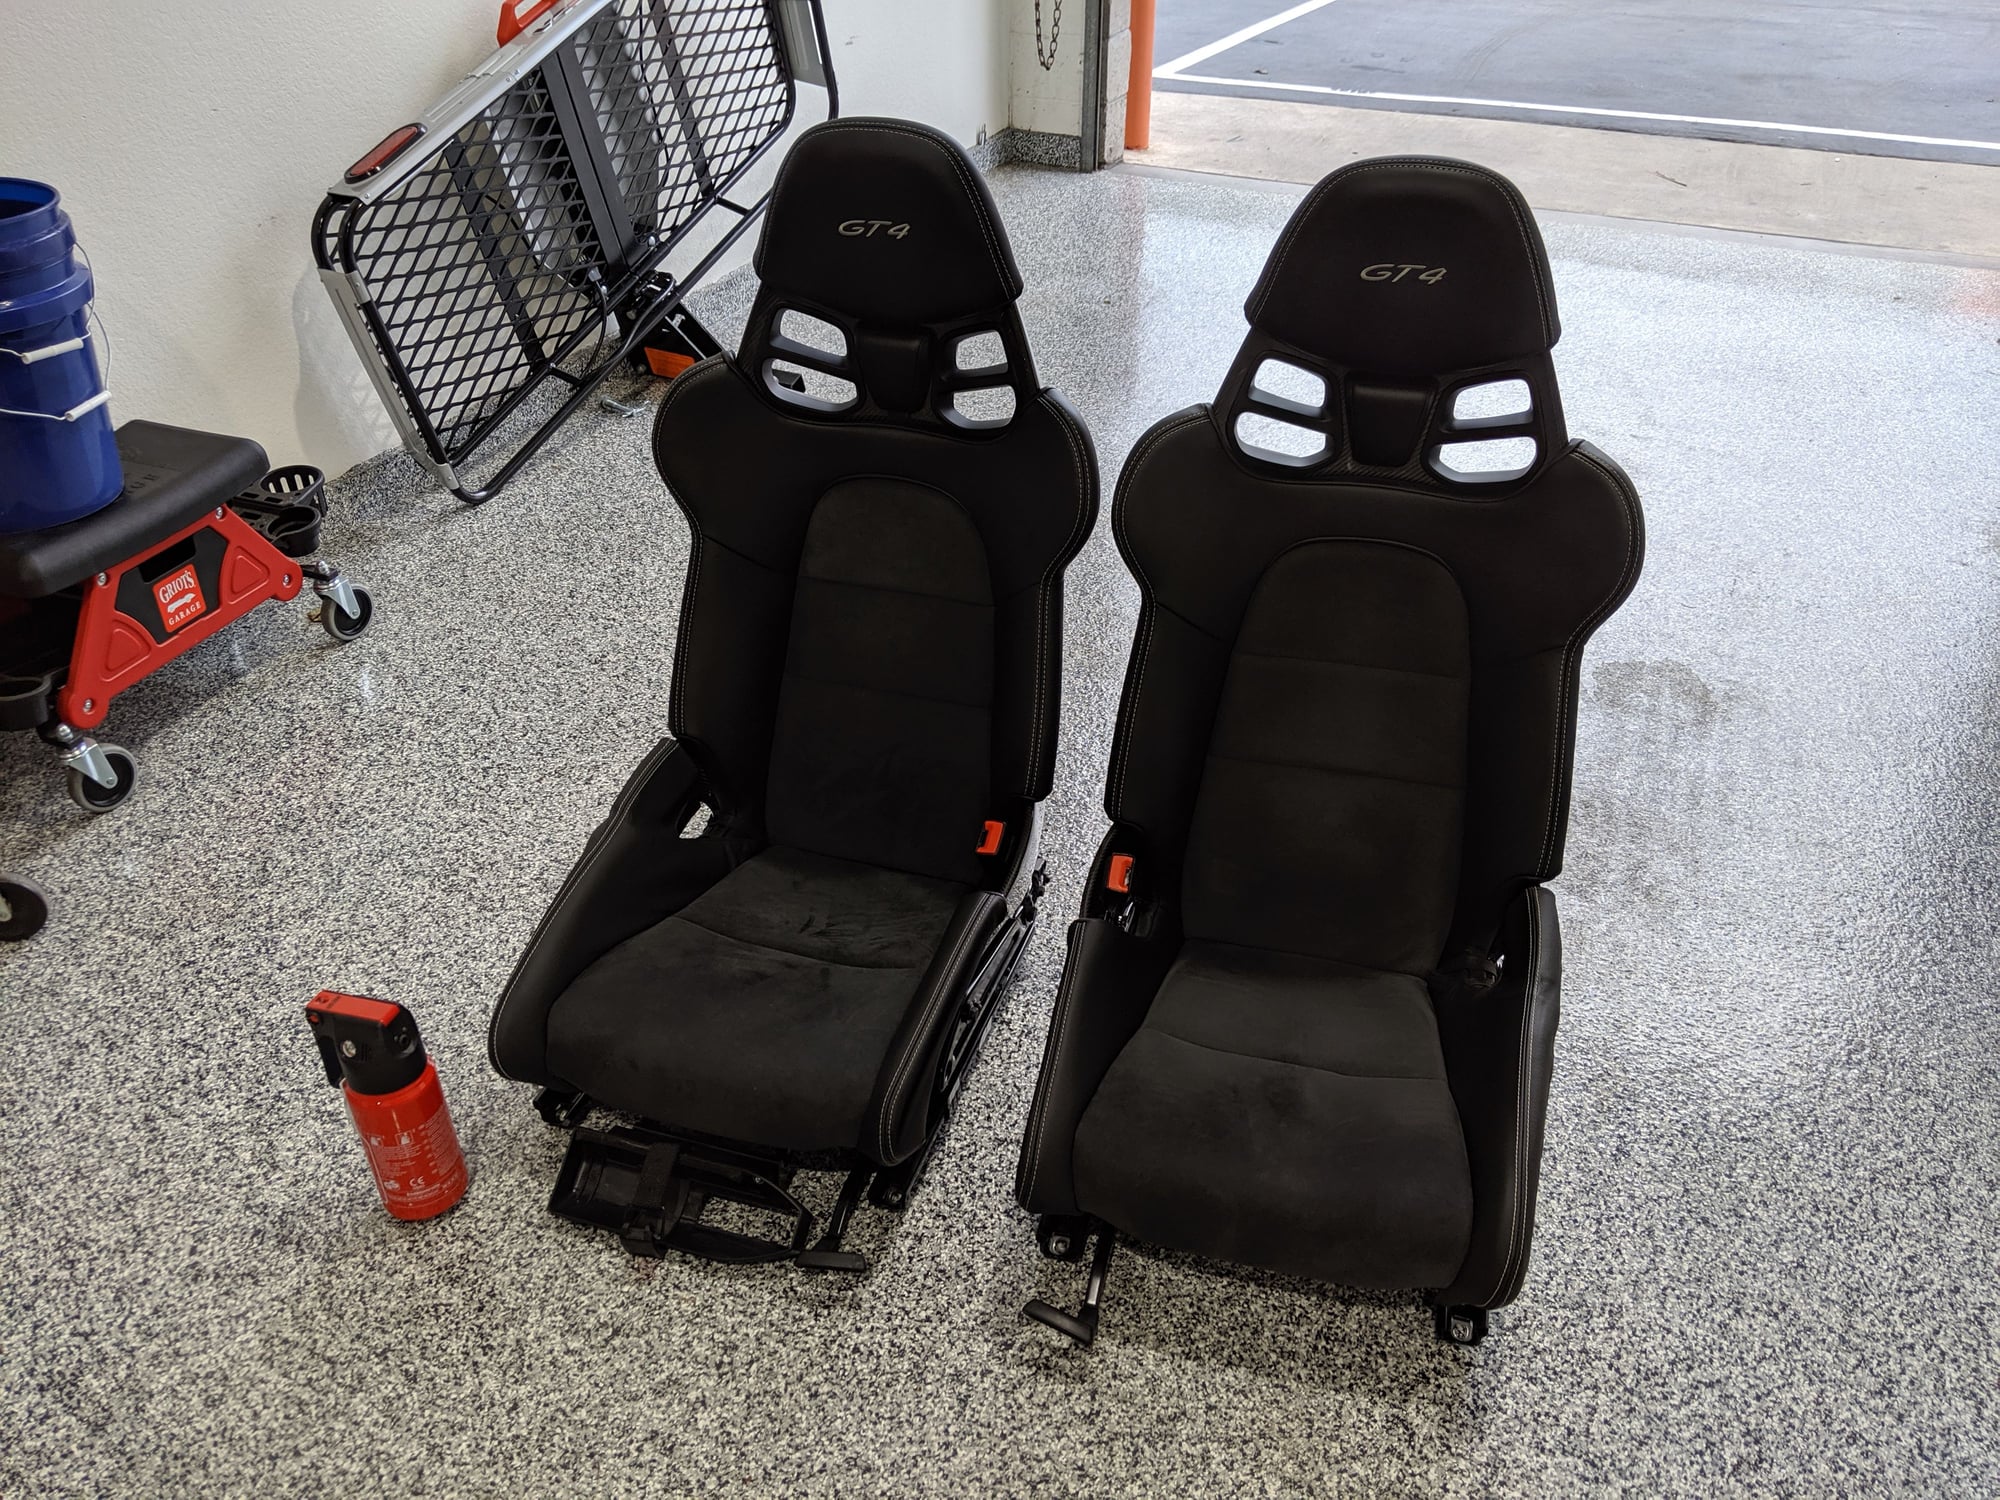 Interior/Upholstery - 981 GT4 LWB - Carbon Lightweight Bucket Seats /w Platinum Stitch + fire extinguisher - Used - 2016 Porsche Cayman GT4 - Gardena, CA 90249, United States